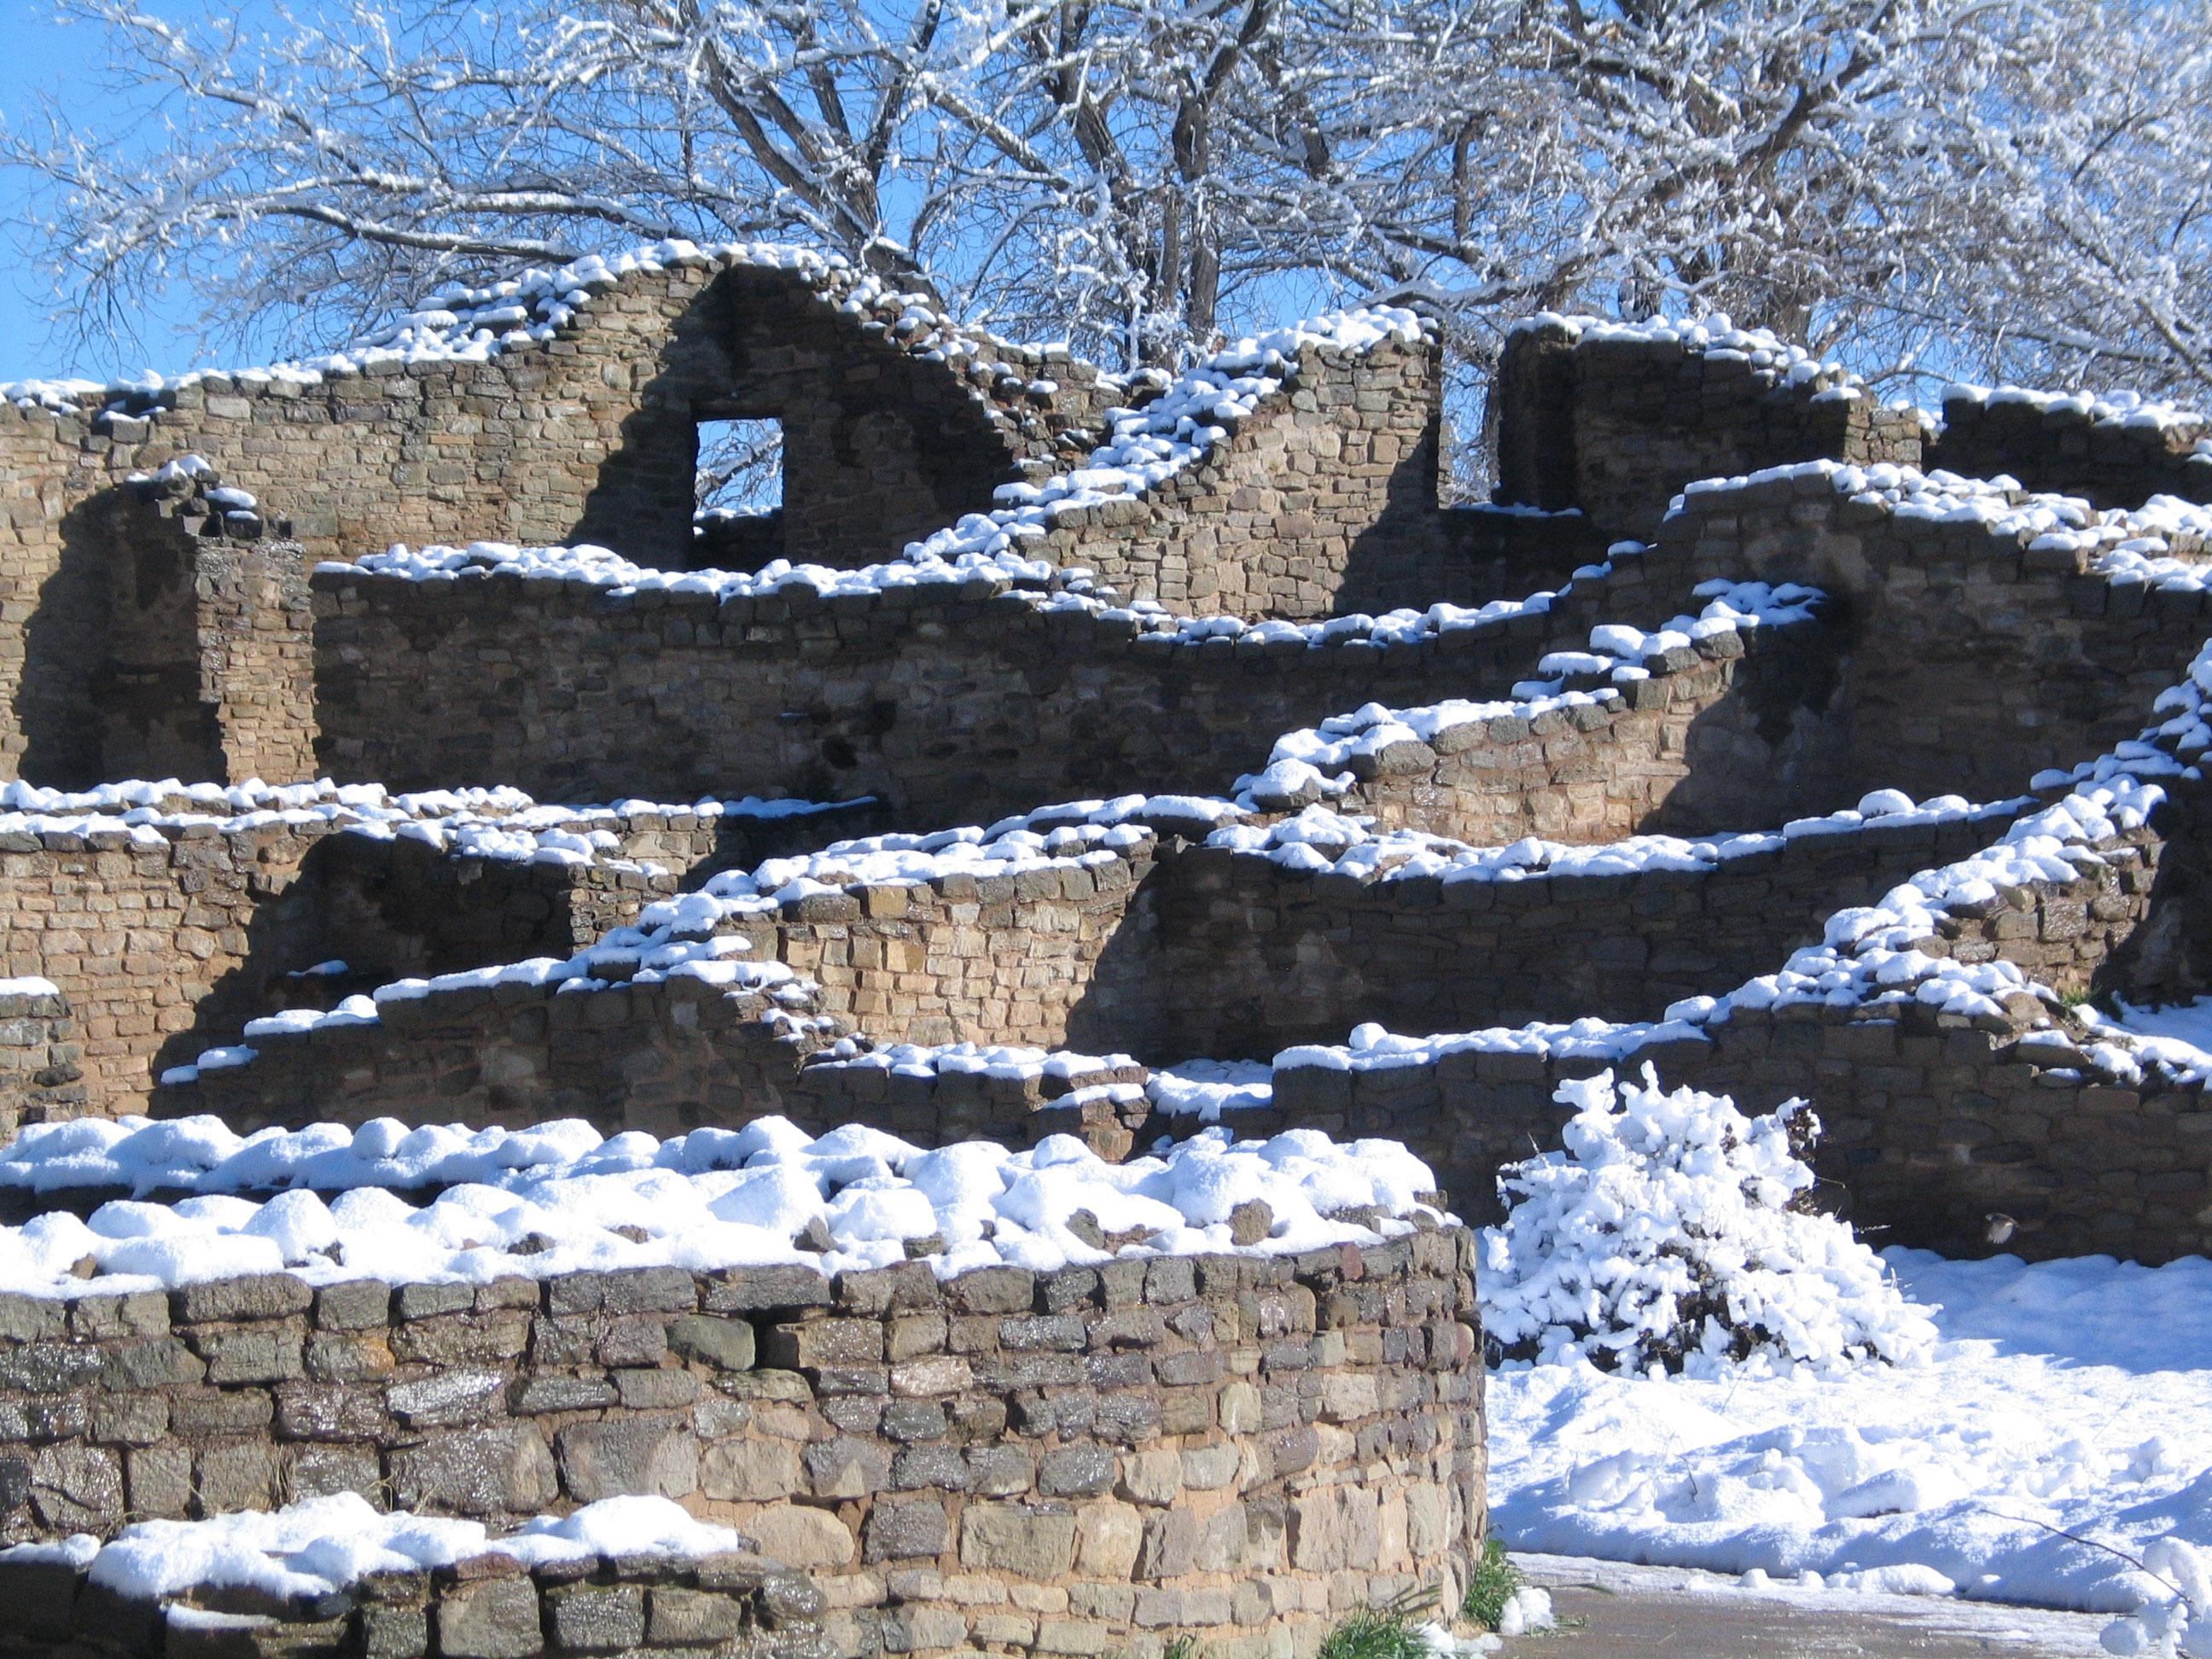 Winter snow on stone ruins